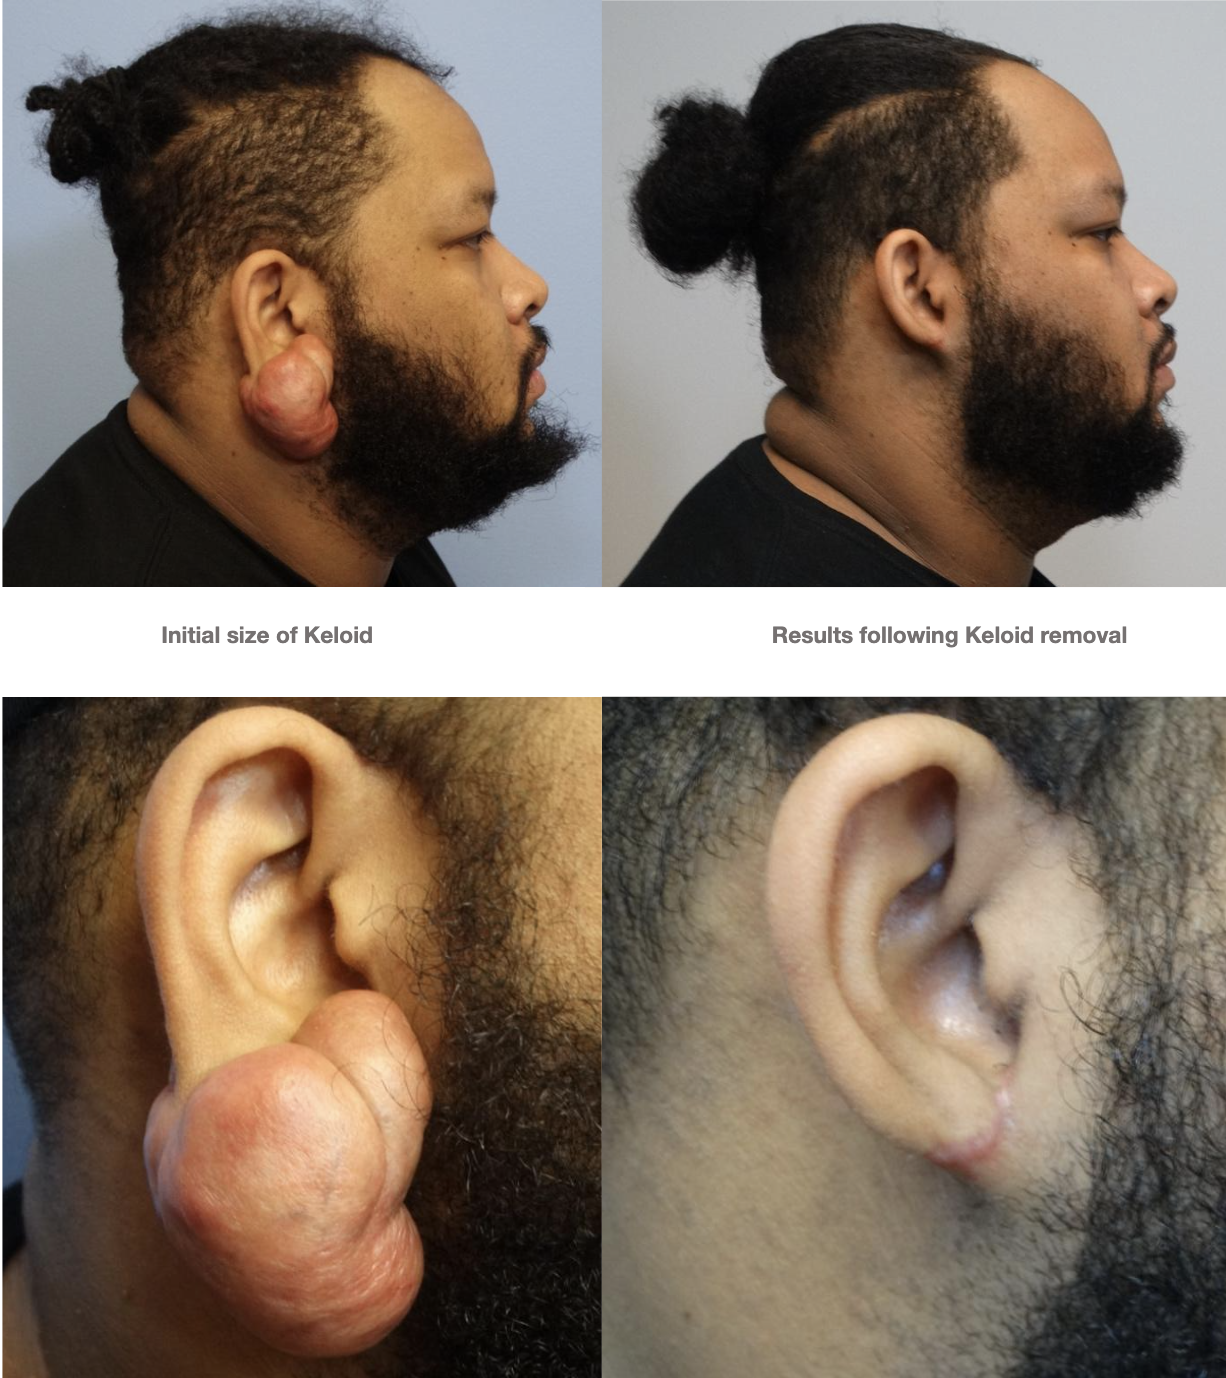 Ear Keloid Compression Clip Single Clip on Earring for Post-op